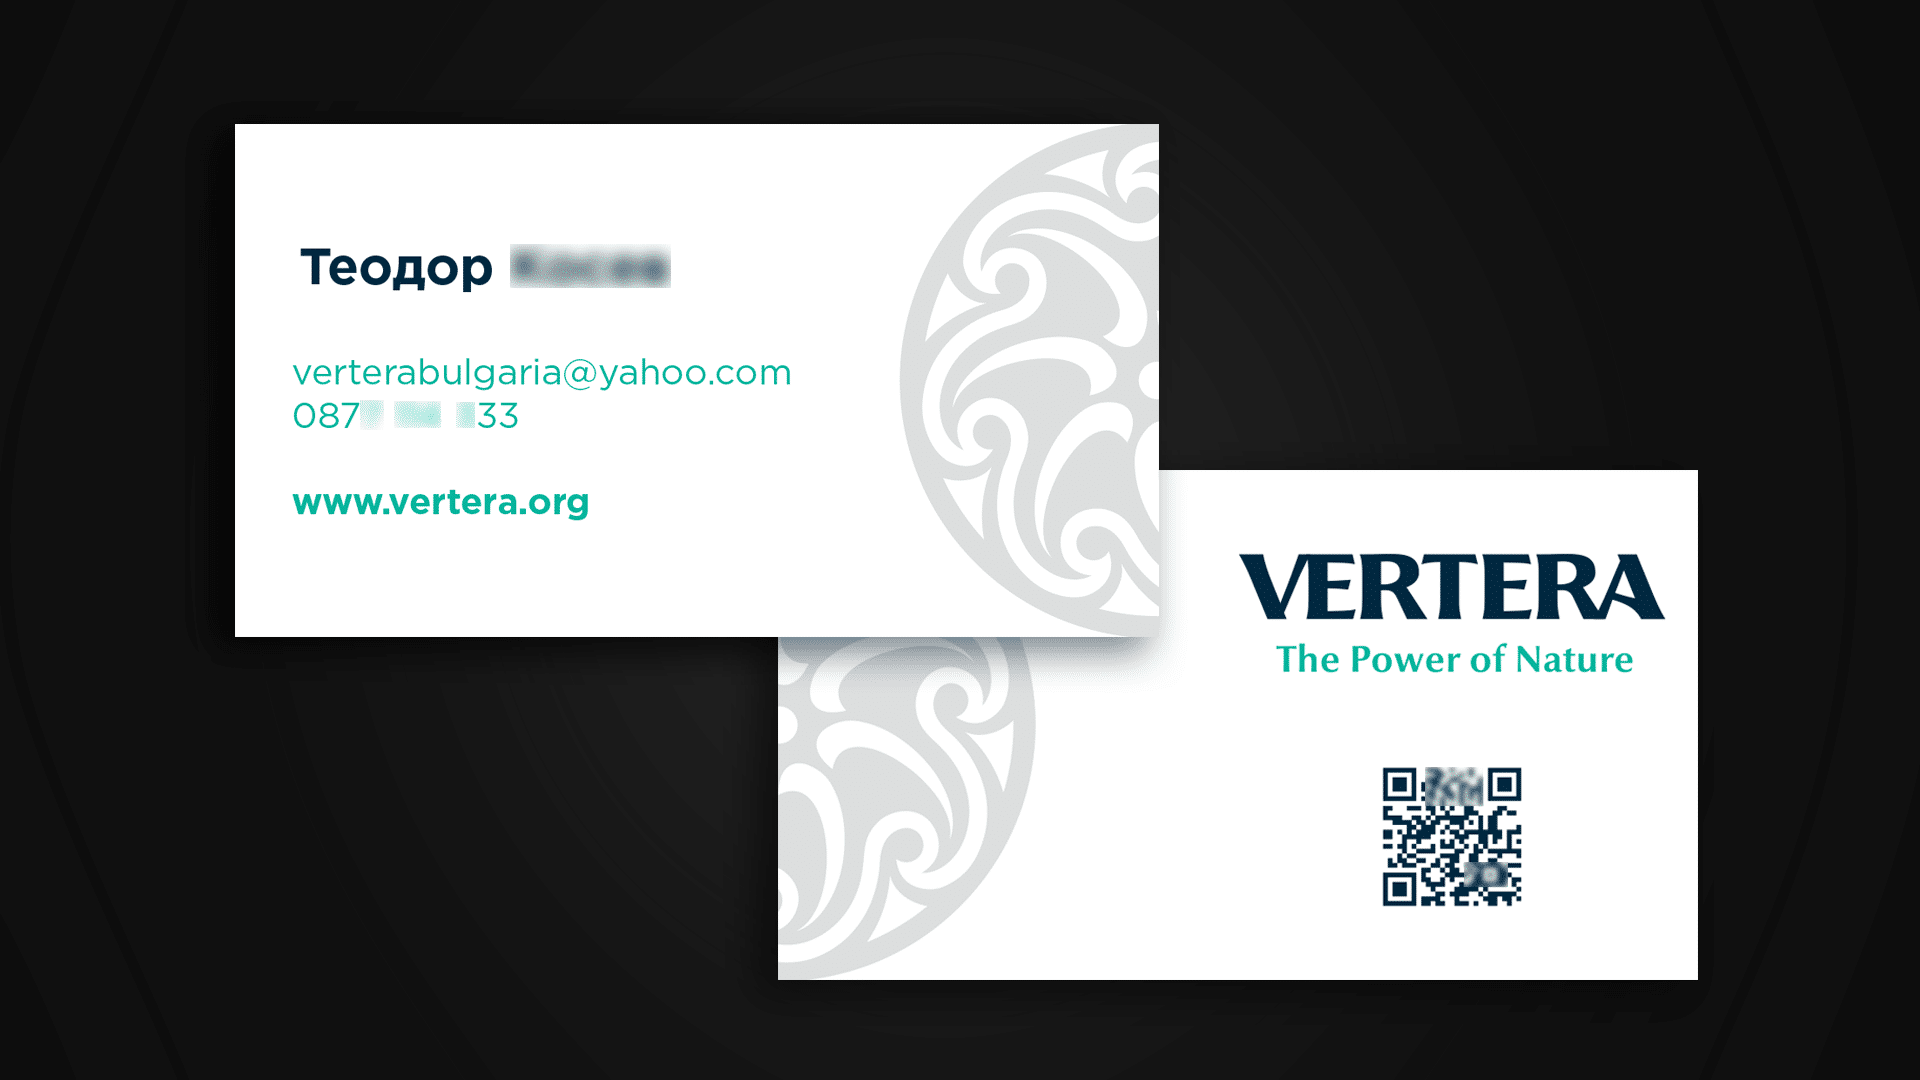 Vertera business card